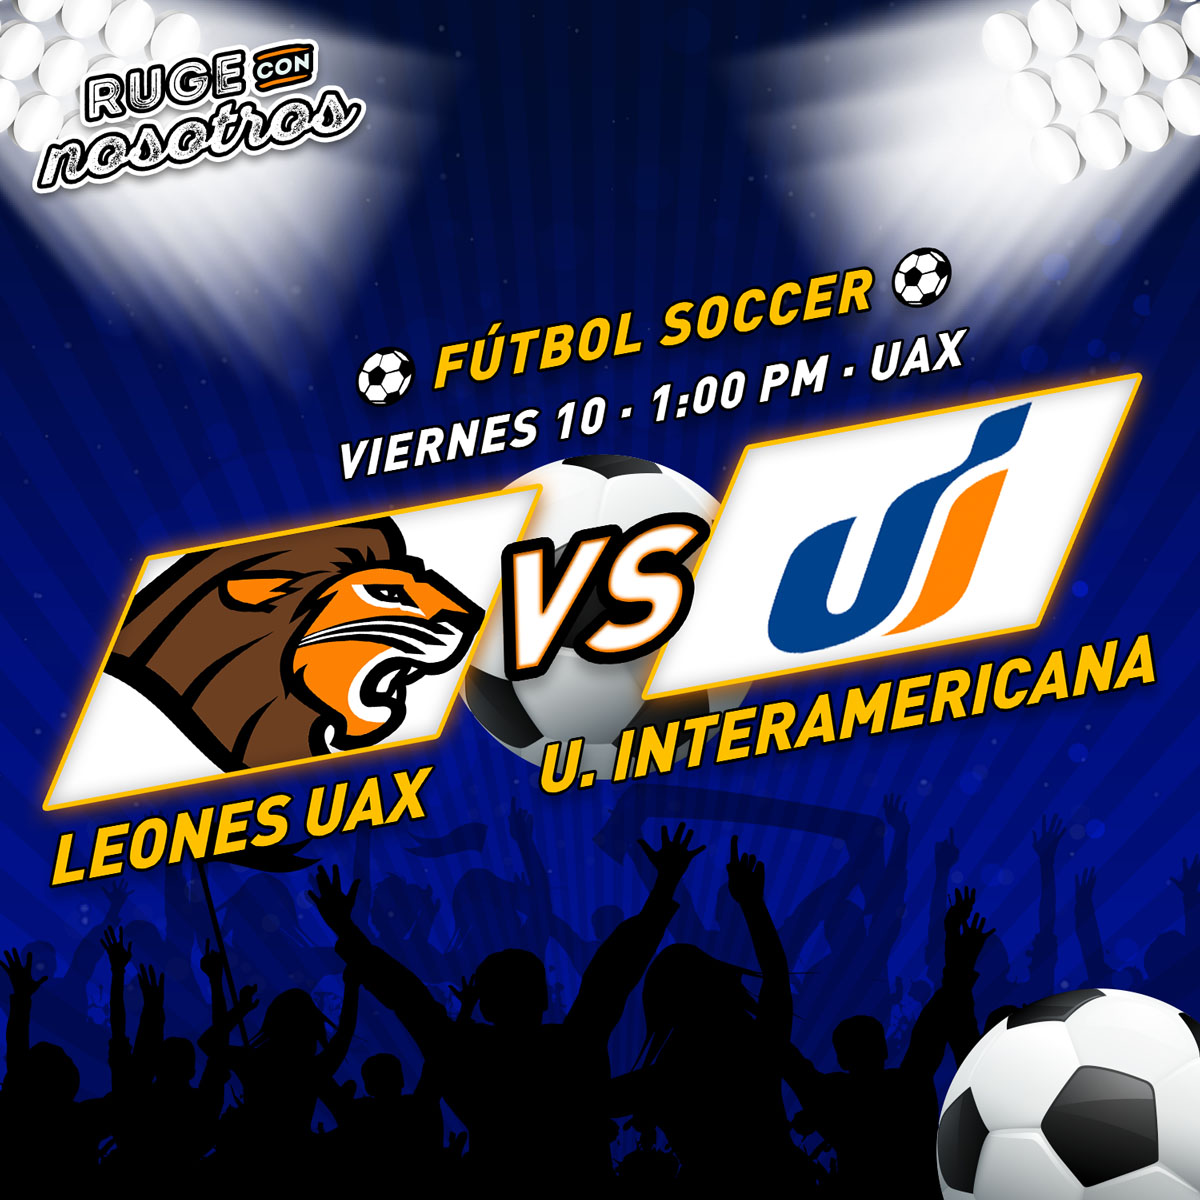 Fútbol Soccer Varonil: UAX vs U. Interamericana